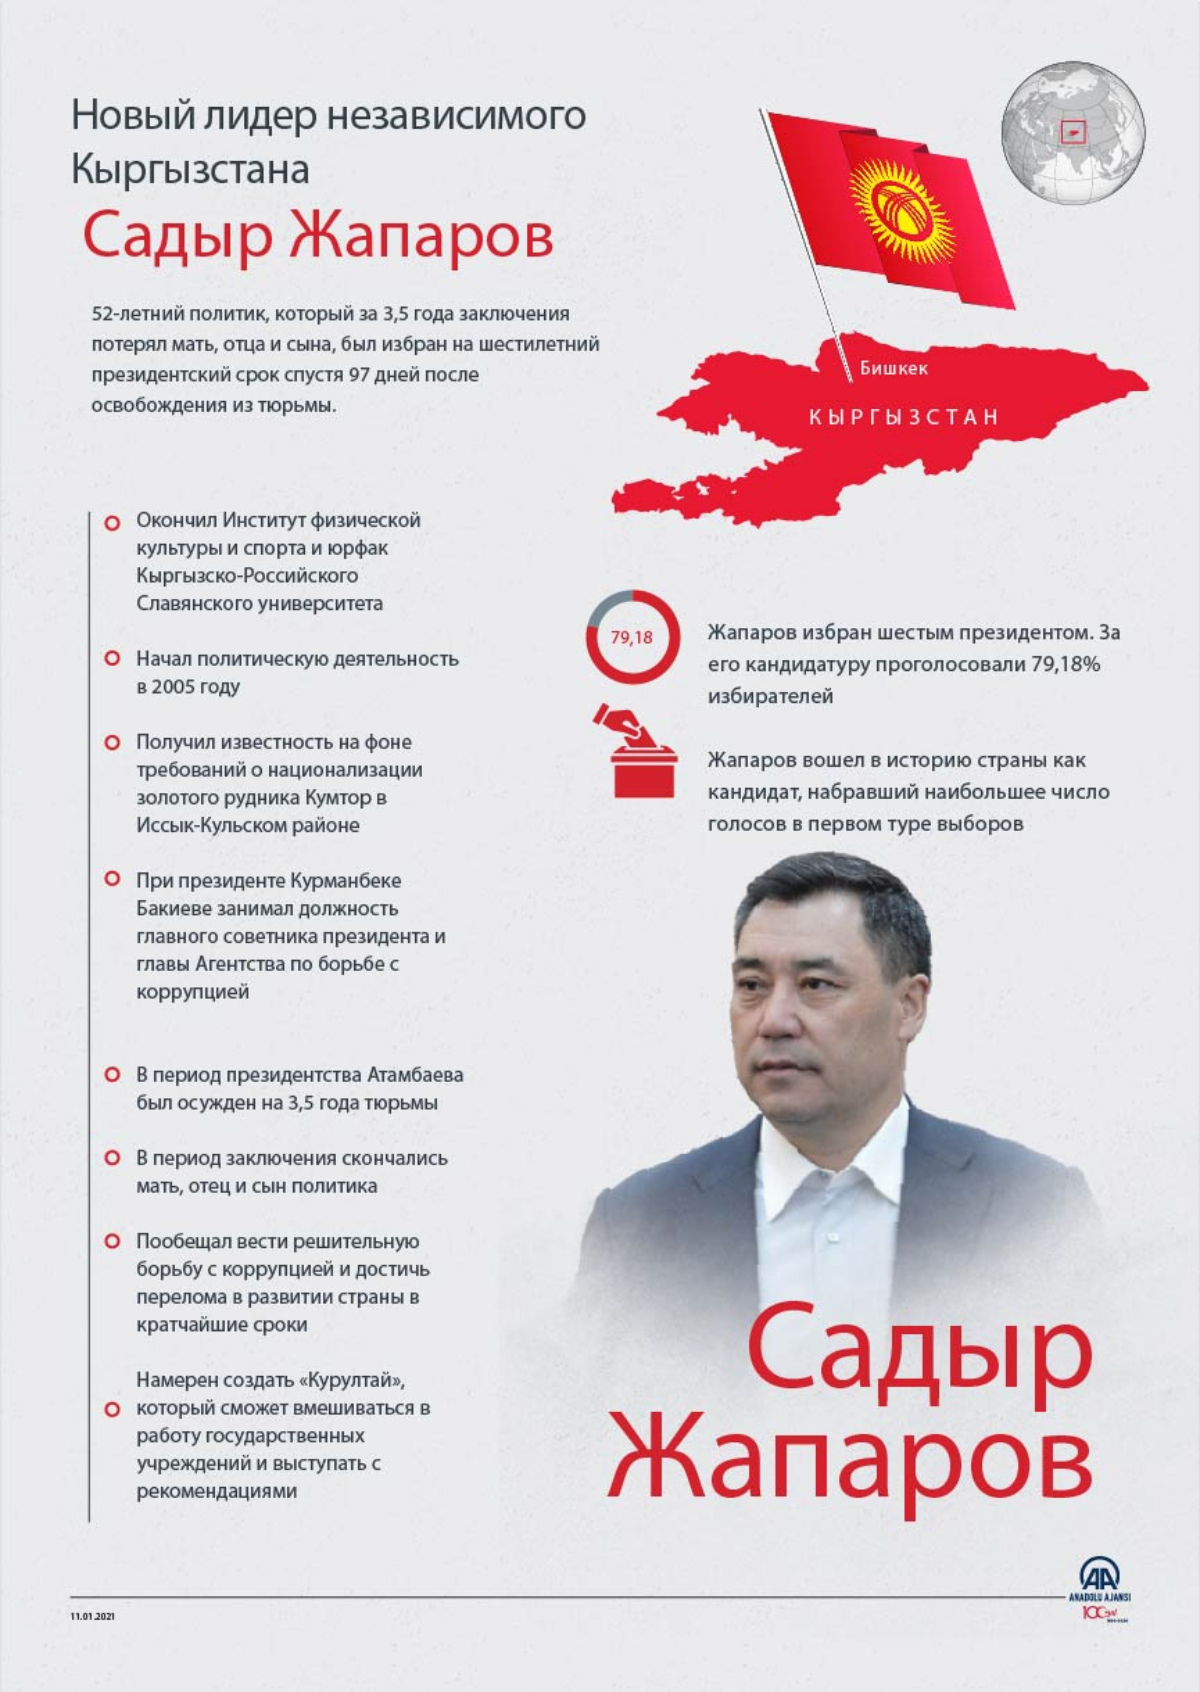 Садыр Жапаров - новый лидер Кыргызстана